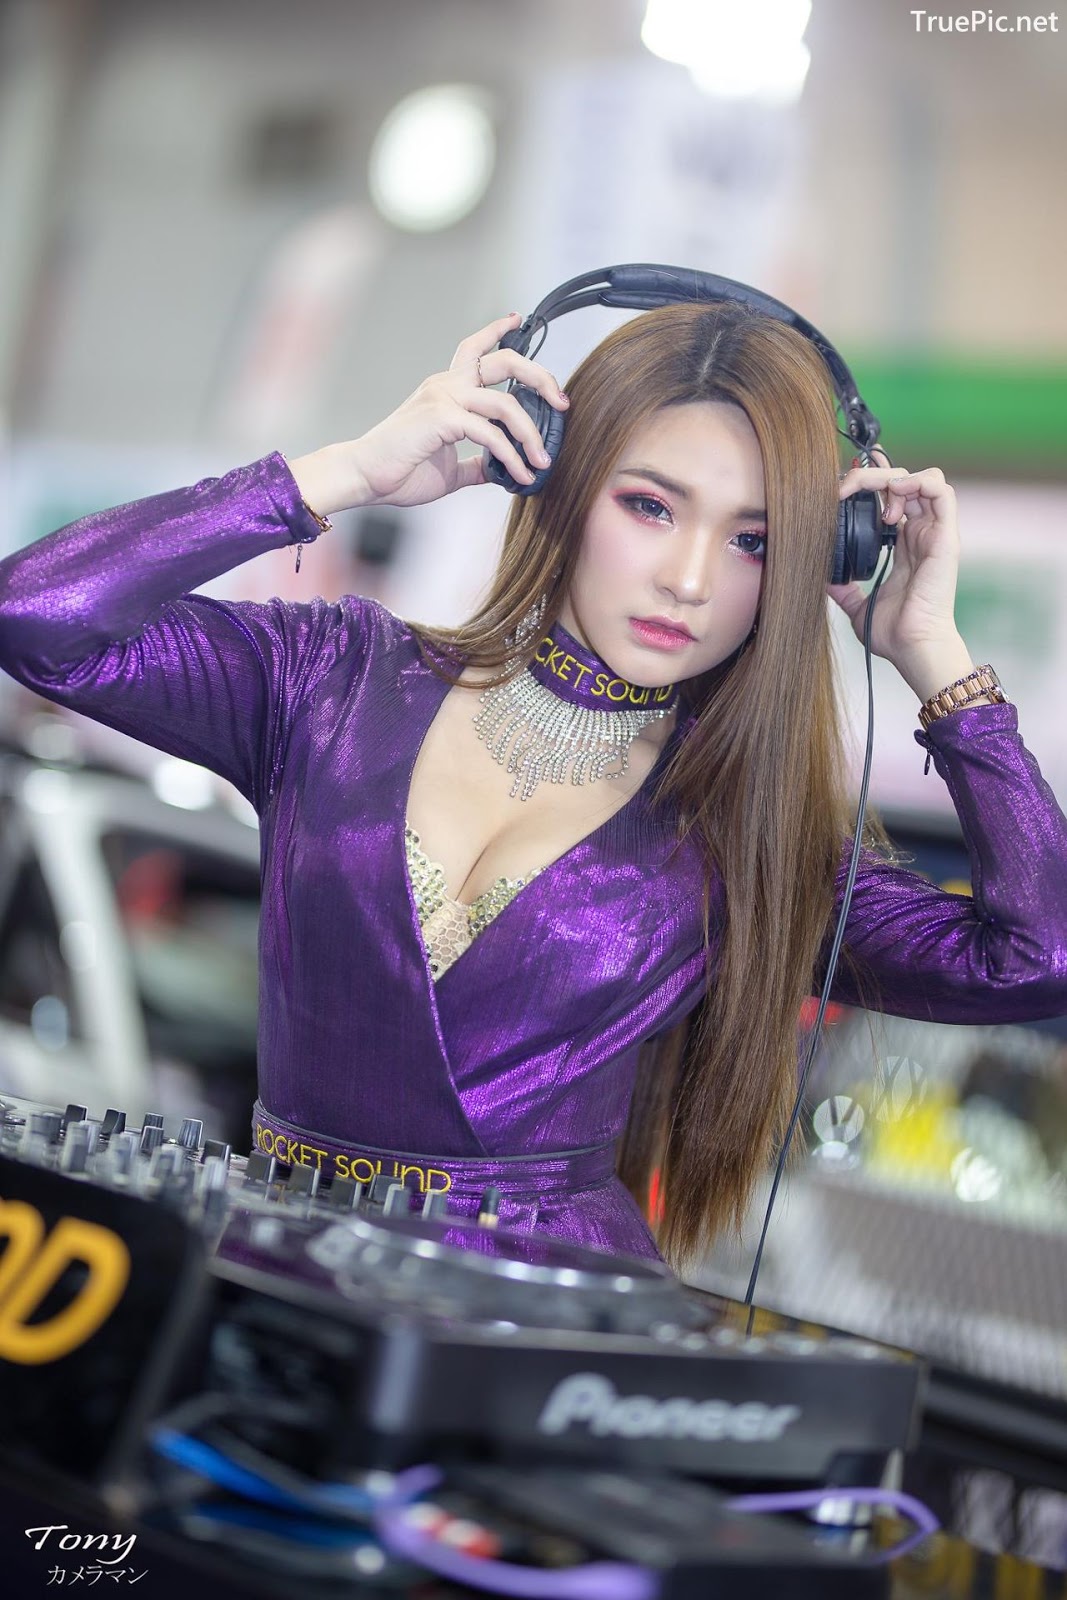 Image-Thailand-Hot-Model-Thai-Racing-Girl-At-Big-Motor-2018-TruePic.net- Picture-9